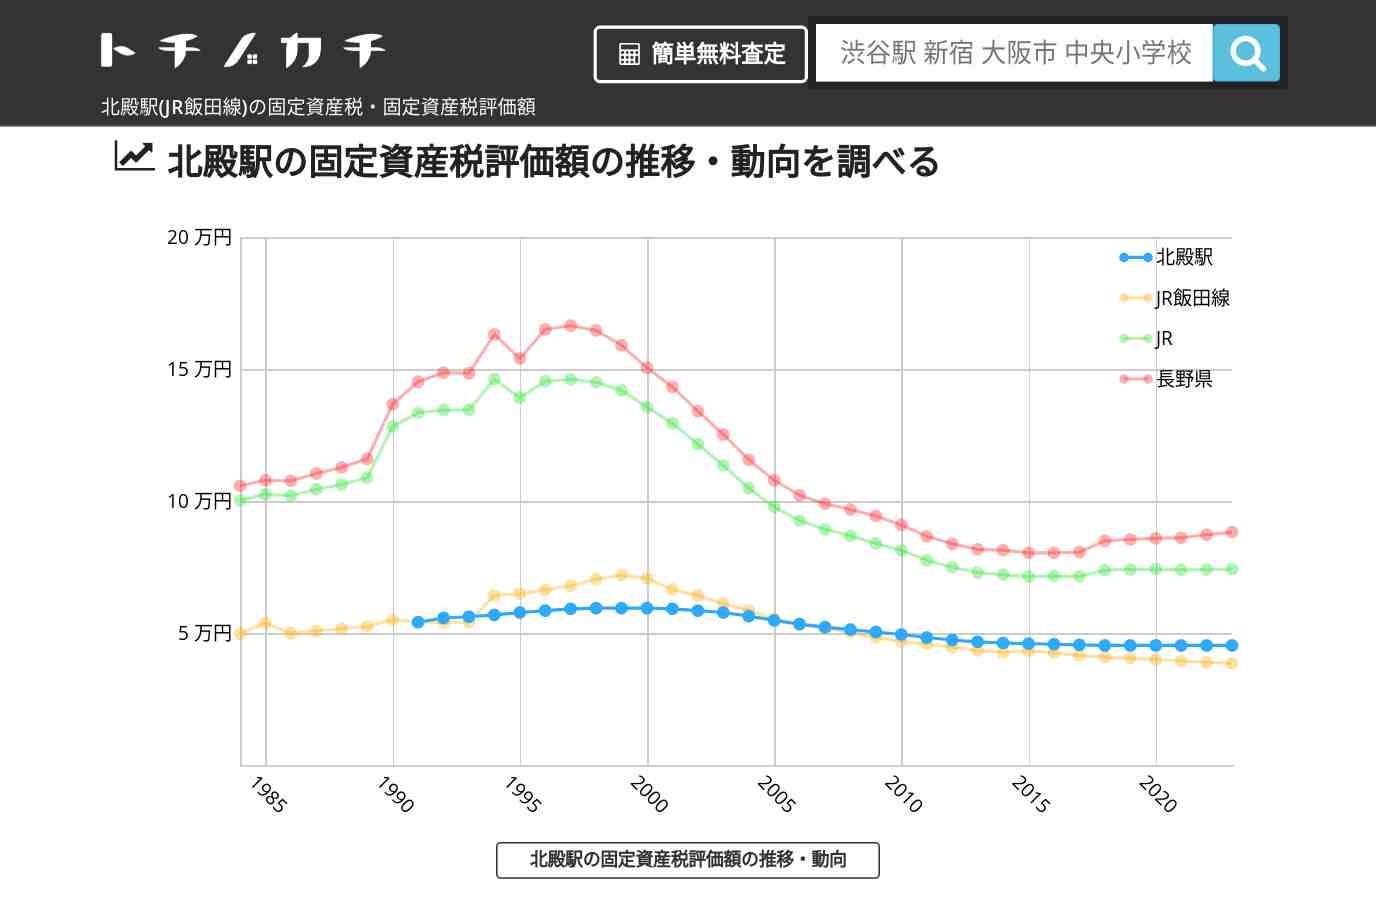 北殿駅(JR飯田線)の固定資産税・固定資産税評価額 | トチノカチ